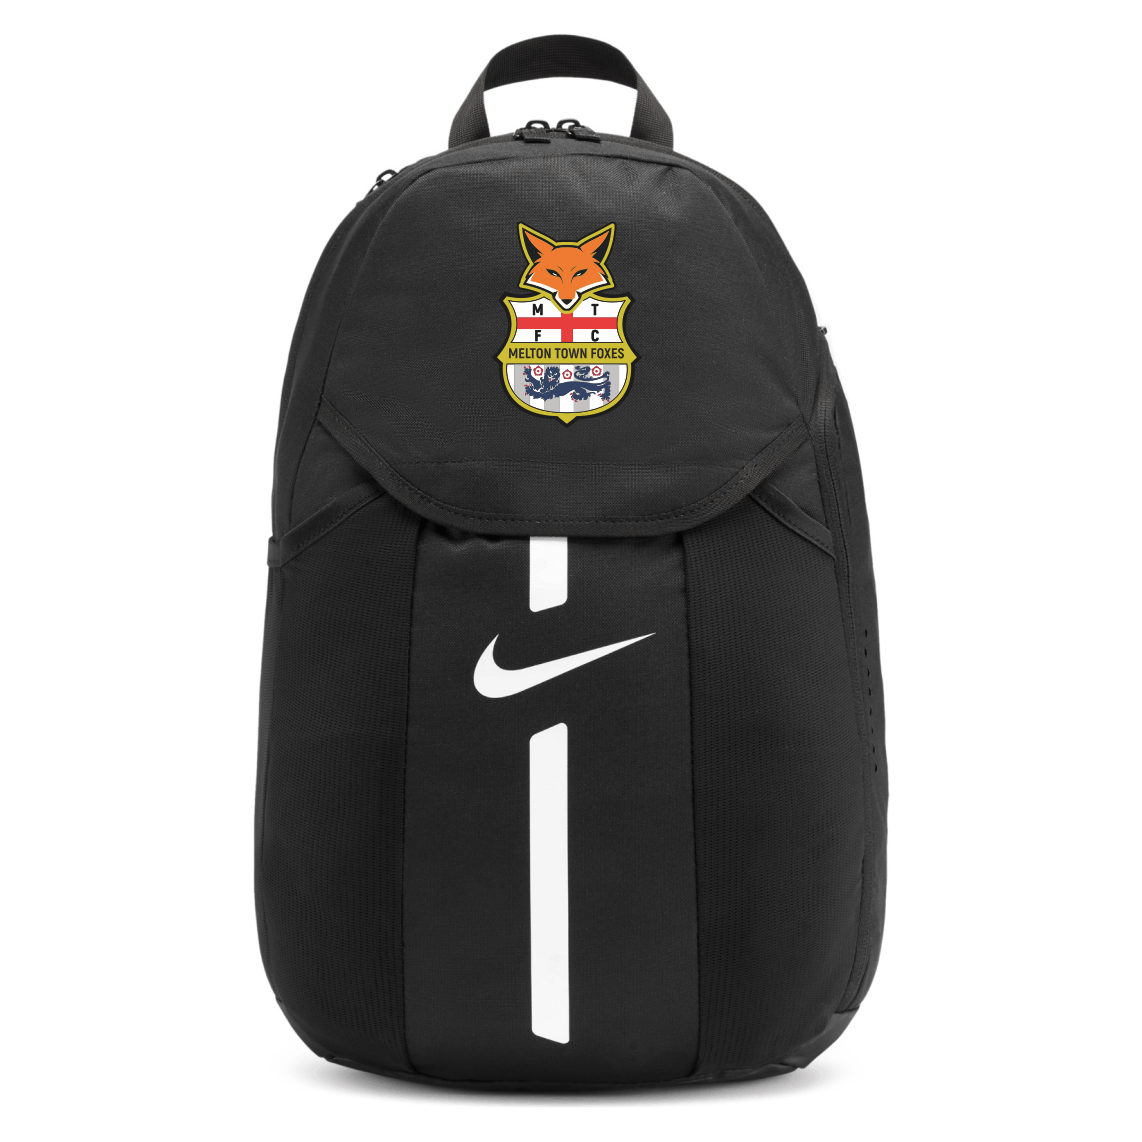 Melton Foxes - Nike Team Backpack